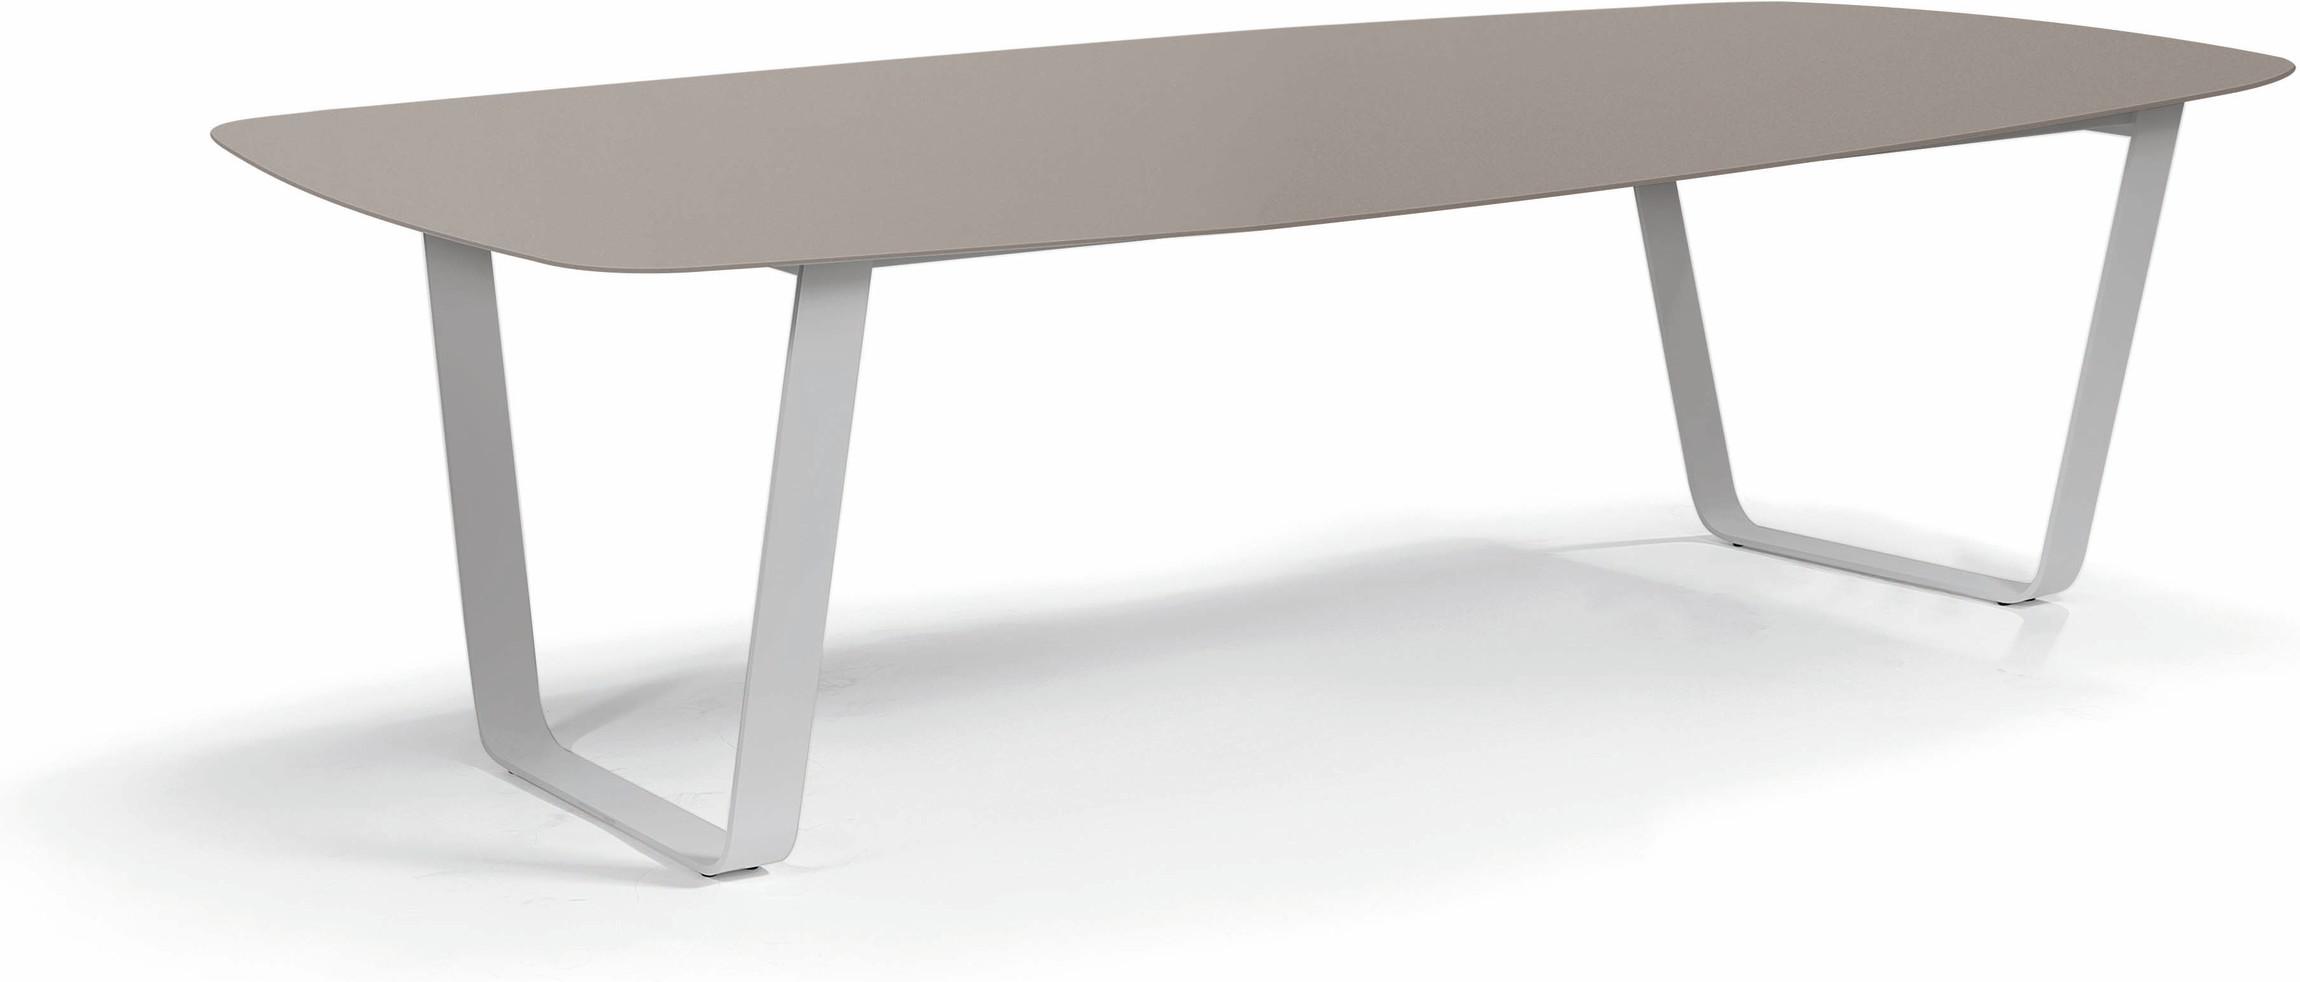 Air Dining table - flint - CQ 264